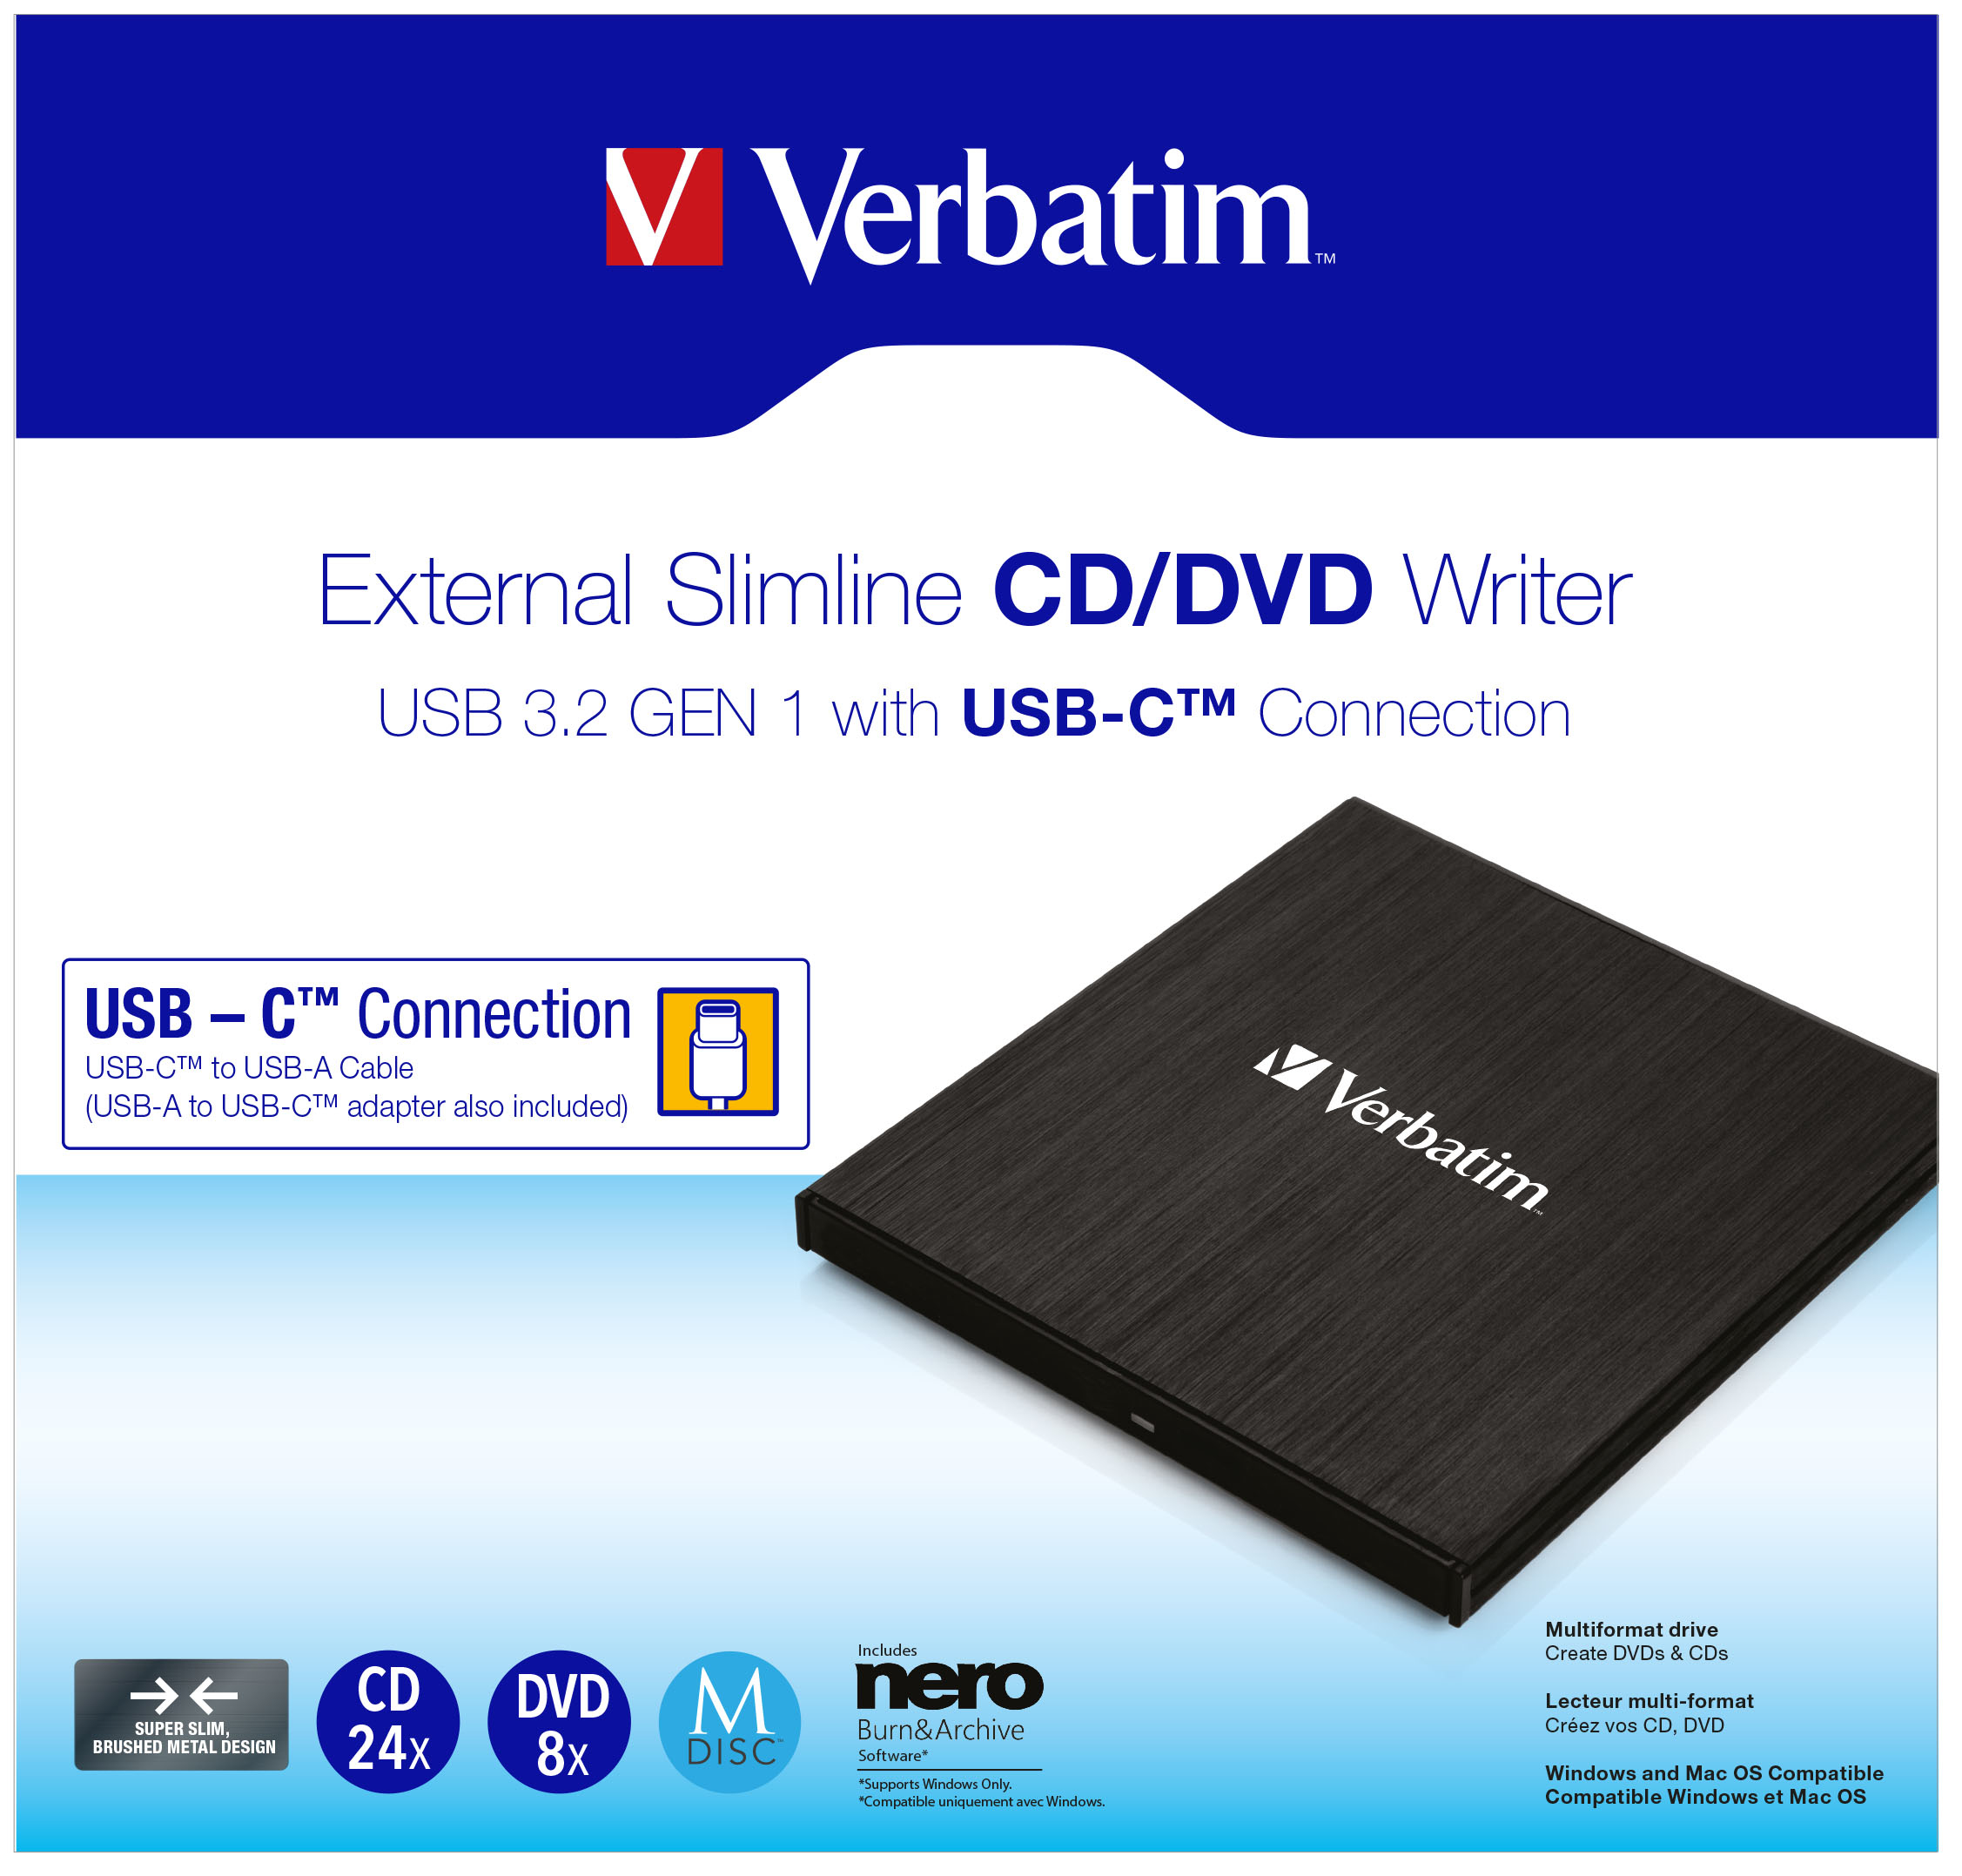 Verbatim External Slimline CD/DVD Writer 3.2 USB-C